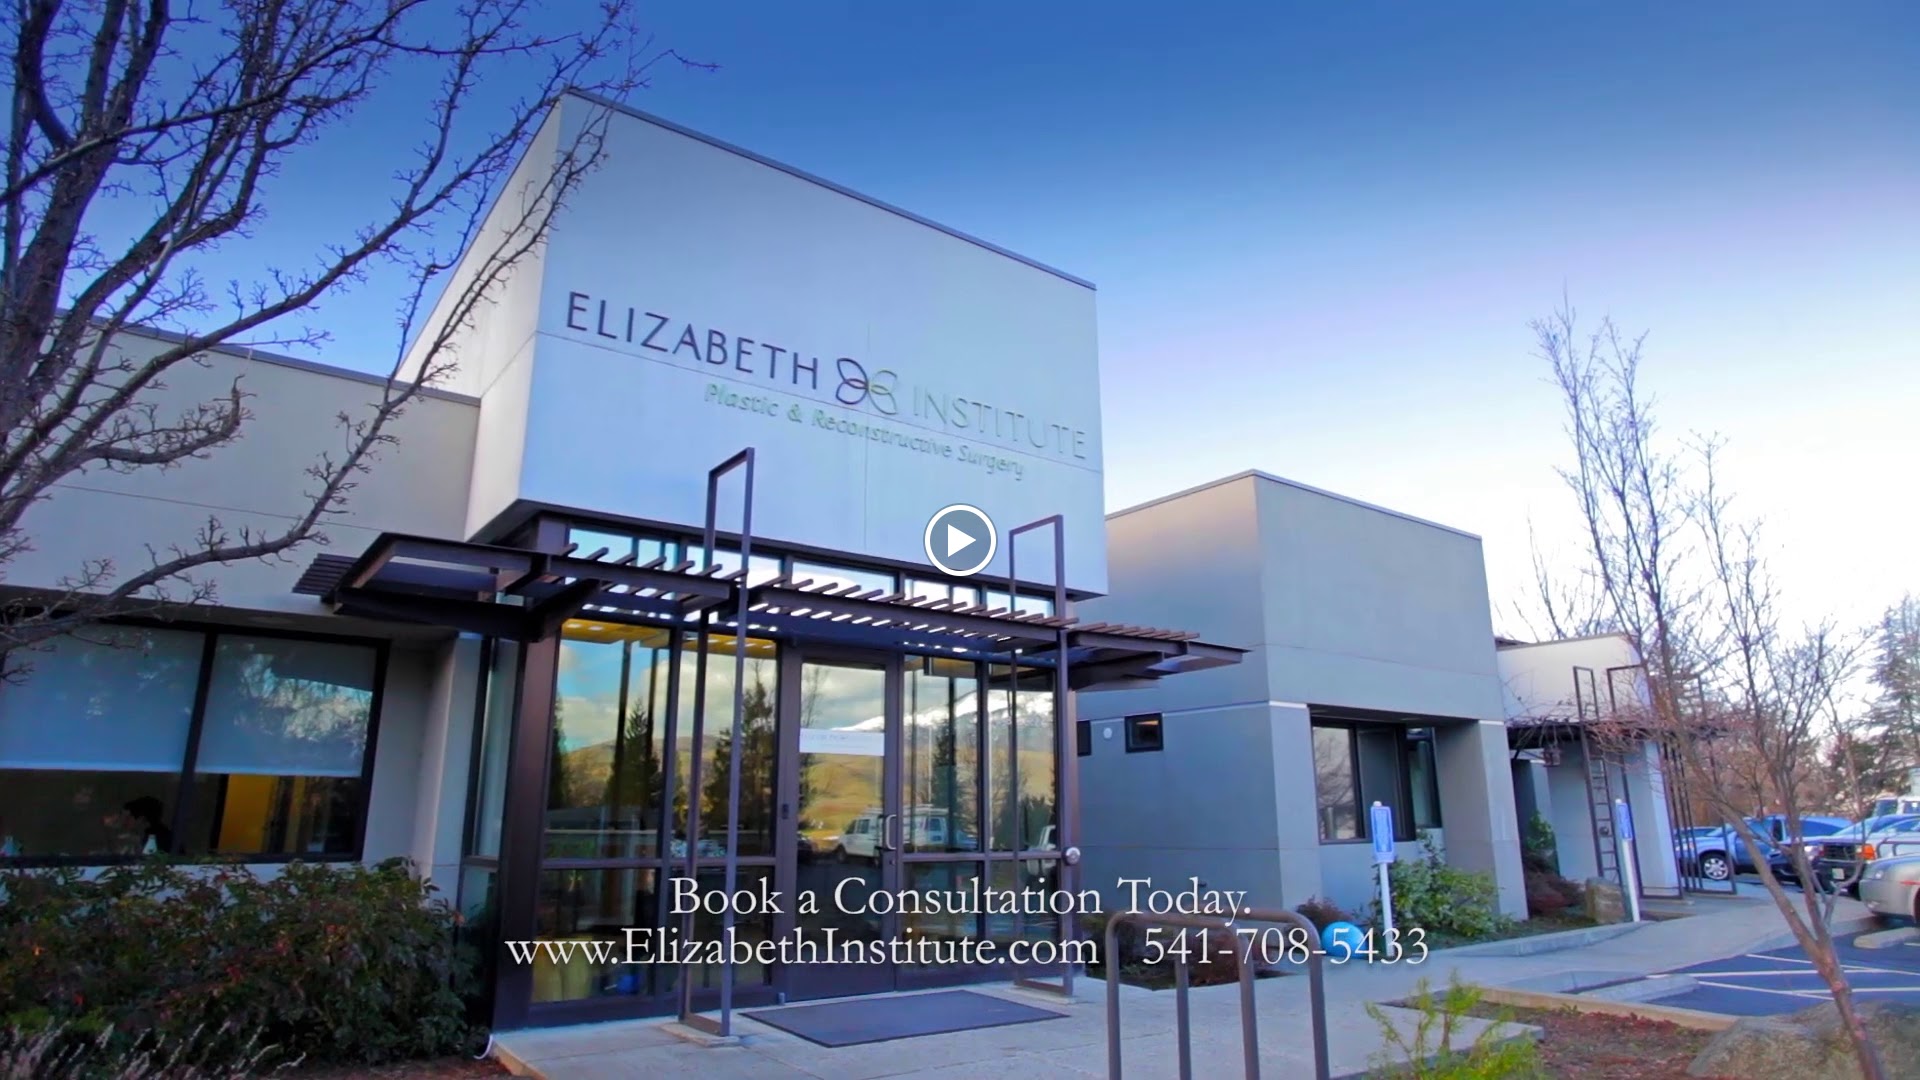 Elizabeth Institute, LLC - Plastic and Reconstructive Surgery | 638 N Main St Ste C, Ashland, OR, 97520 | +1 (541) 708-5433